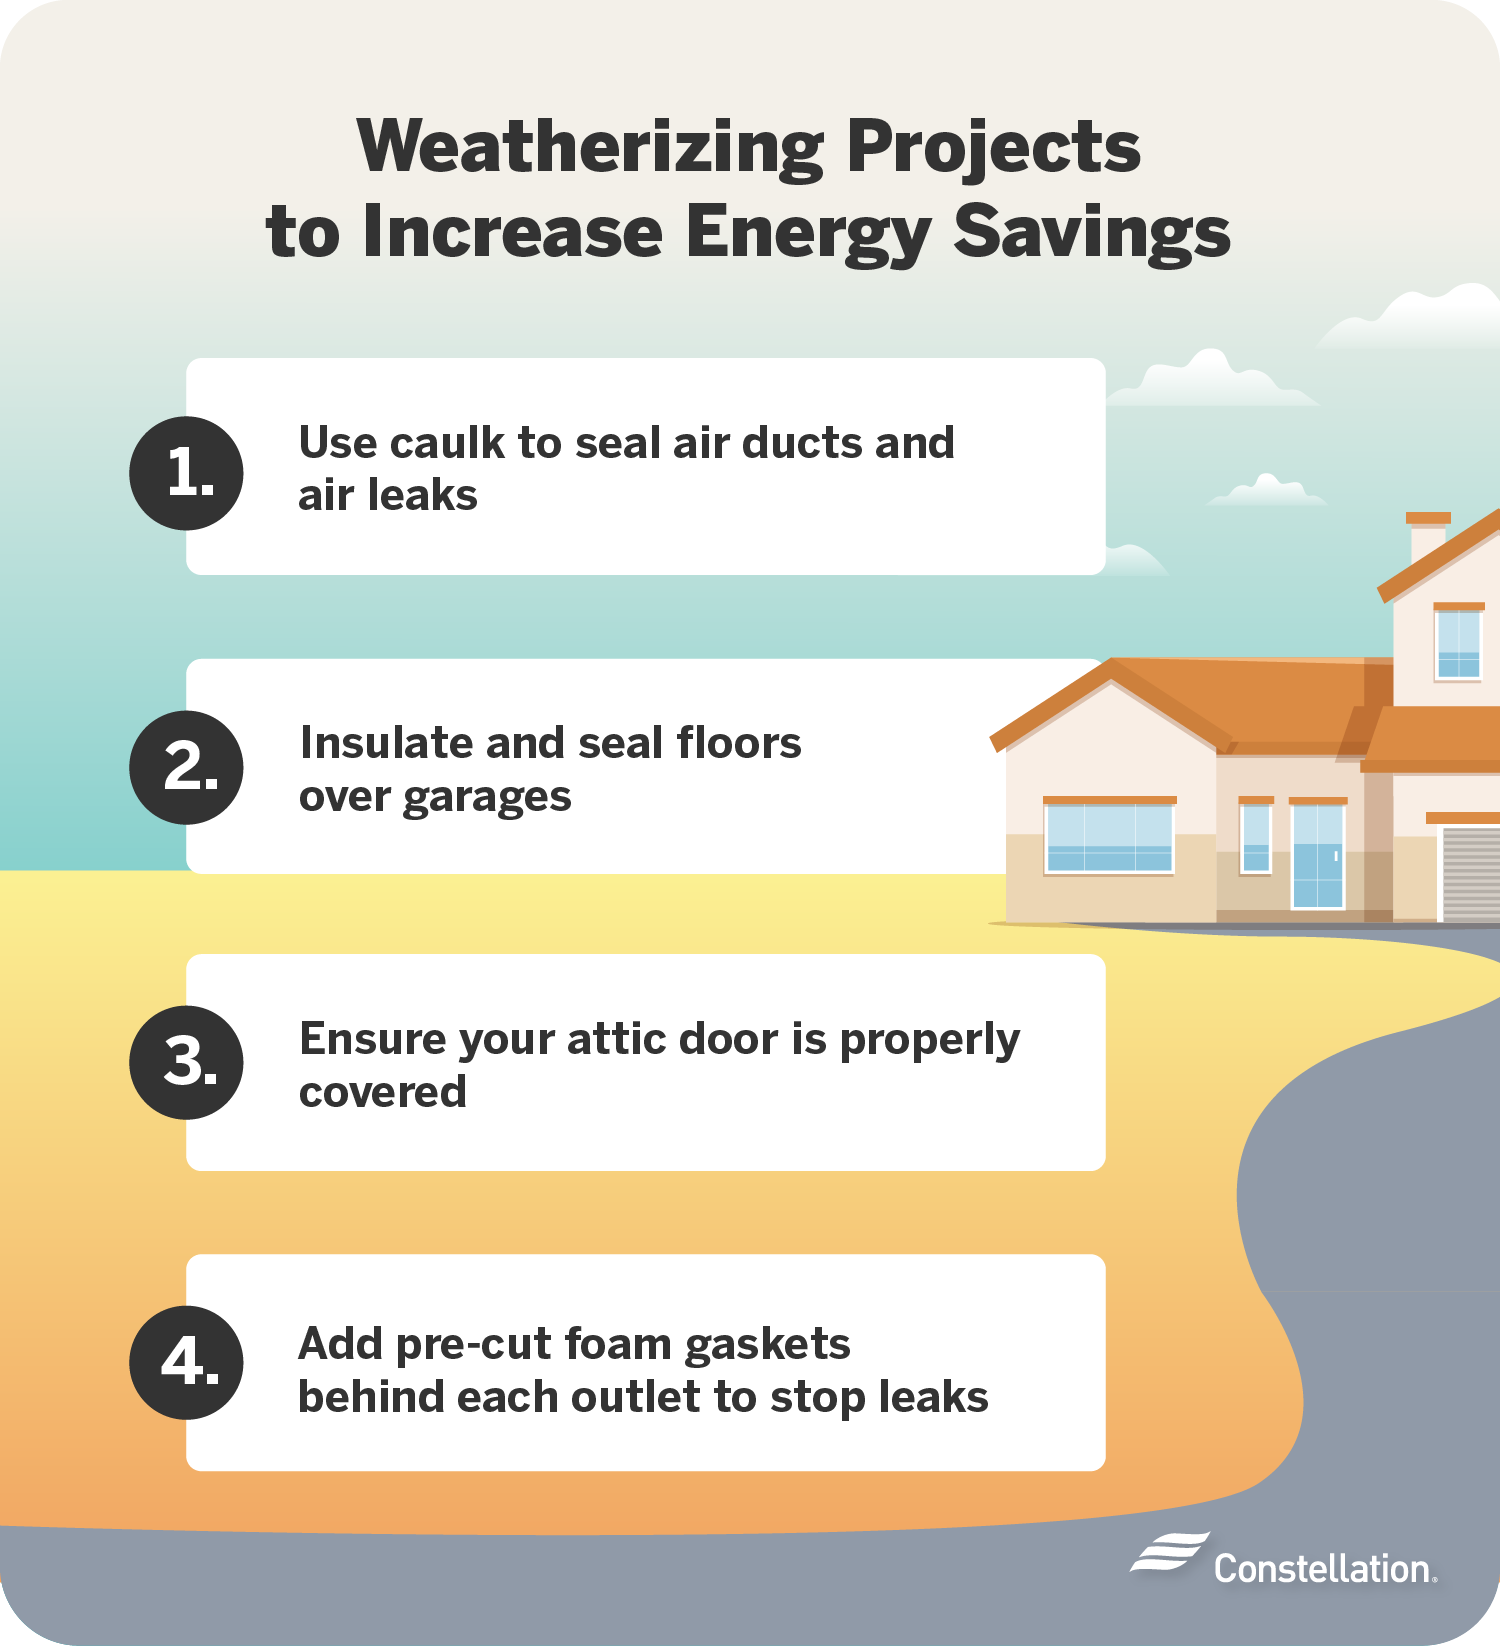 Weatherizing projects to increase energy savings.